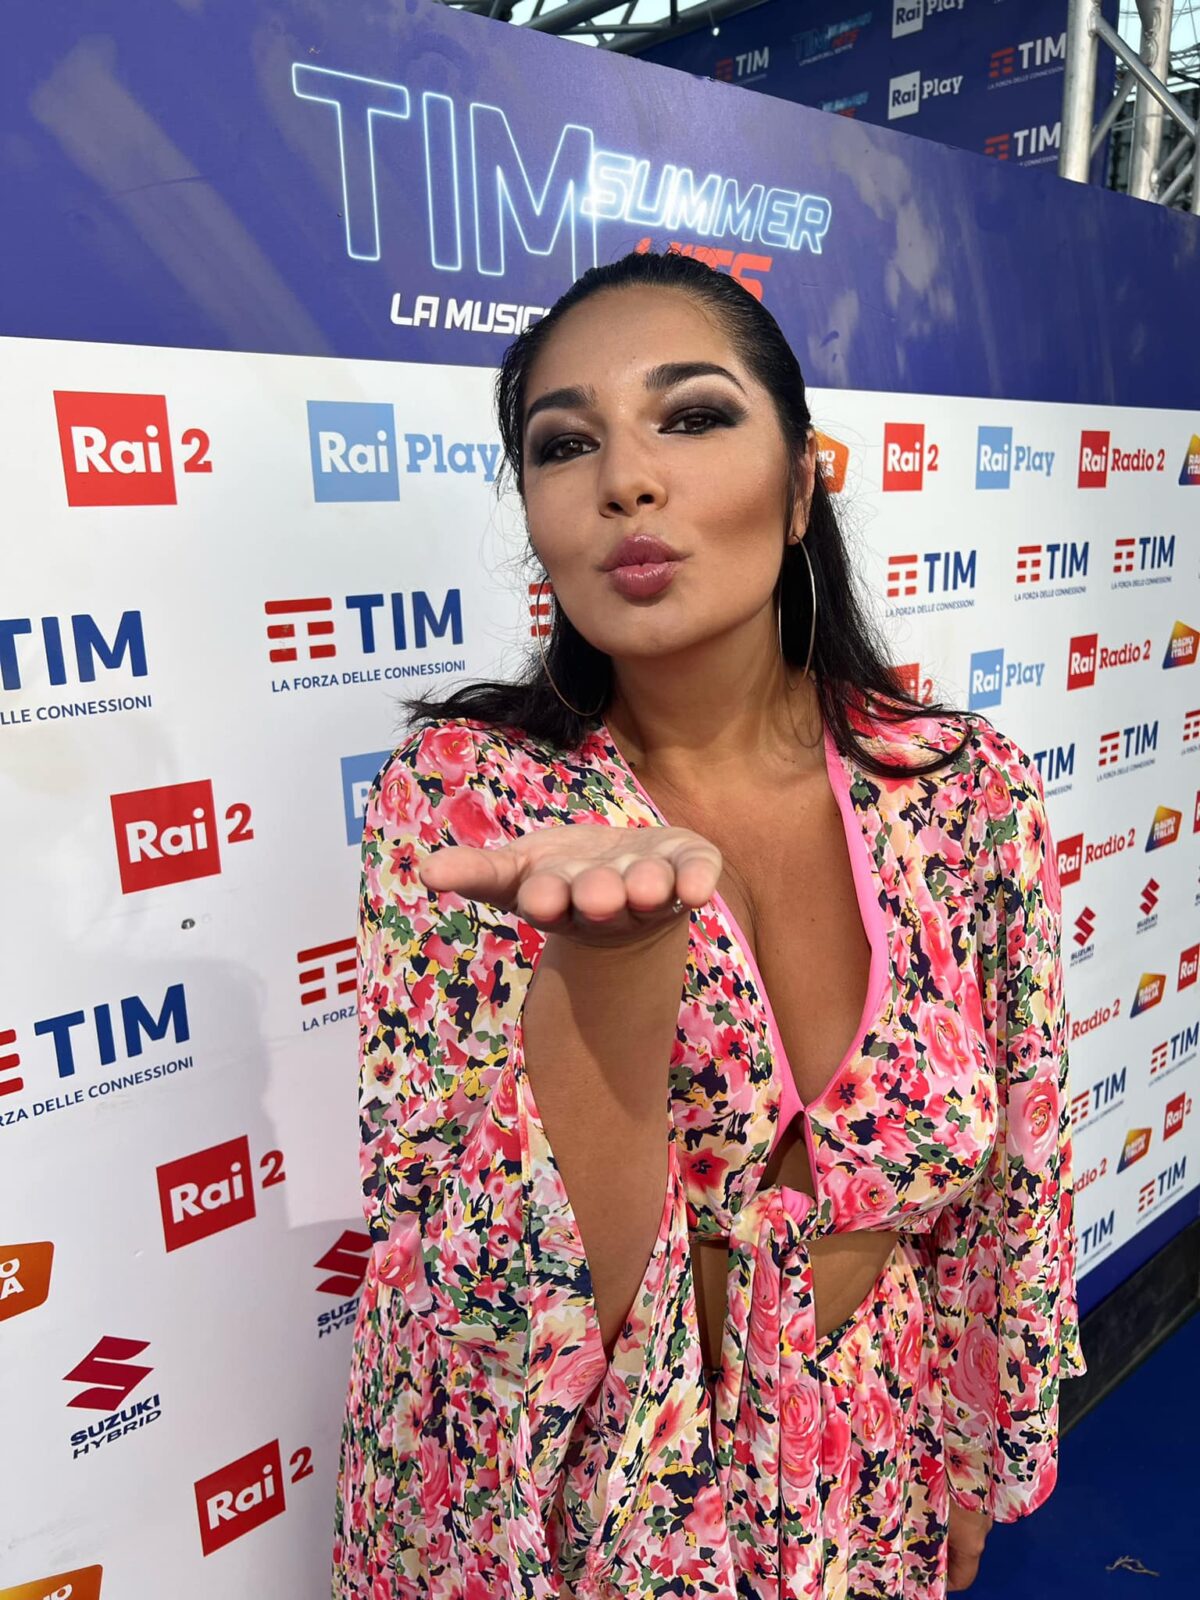 TIM Summer Hits – Elisa D’Ospina sul palco di Rimini: “Esperienza esaltante”